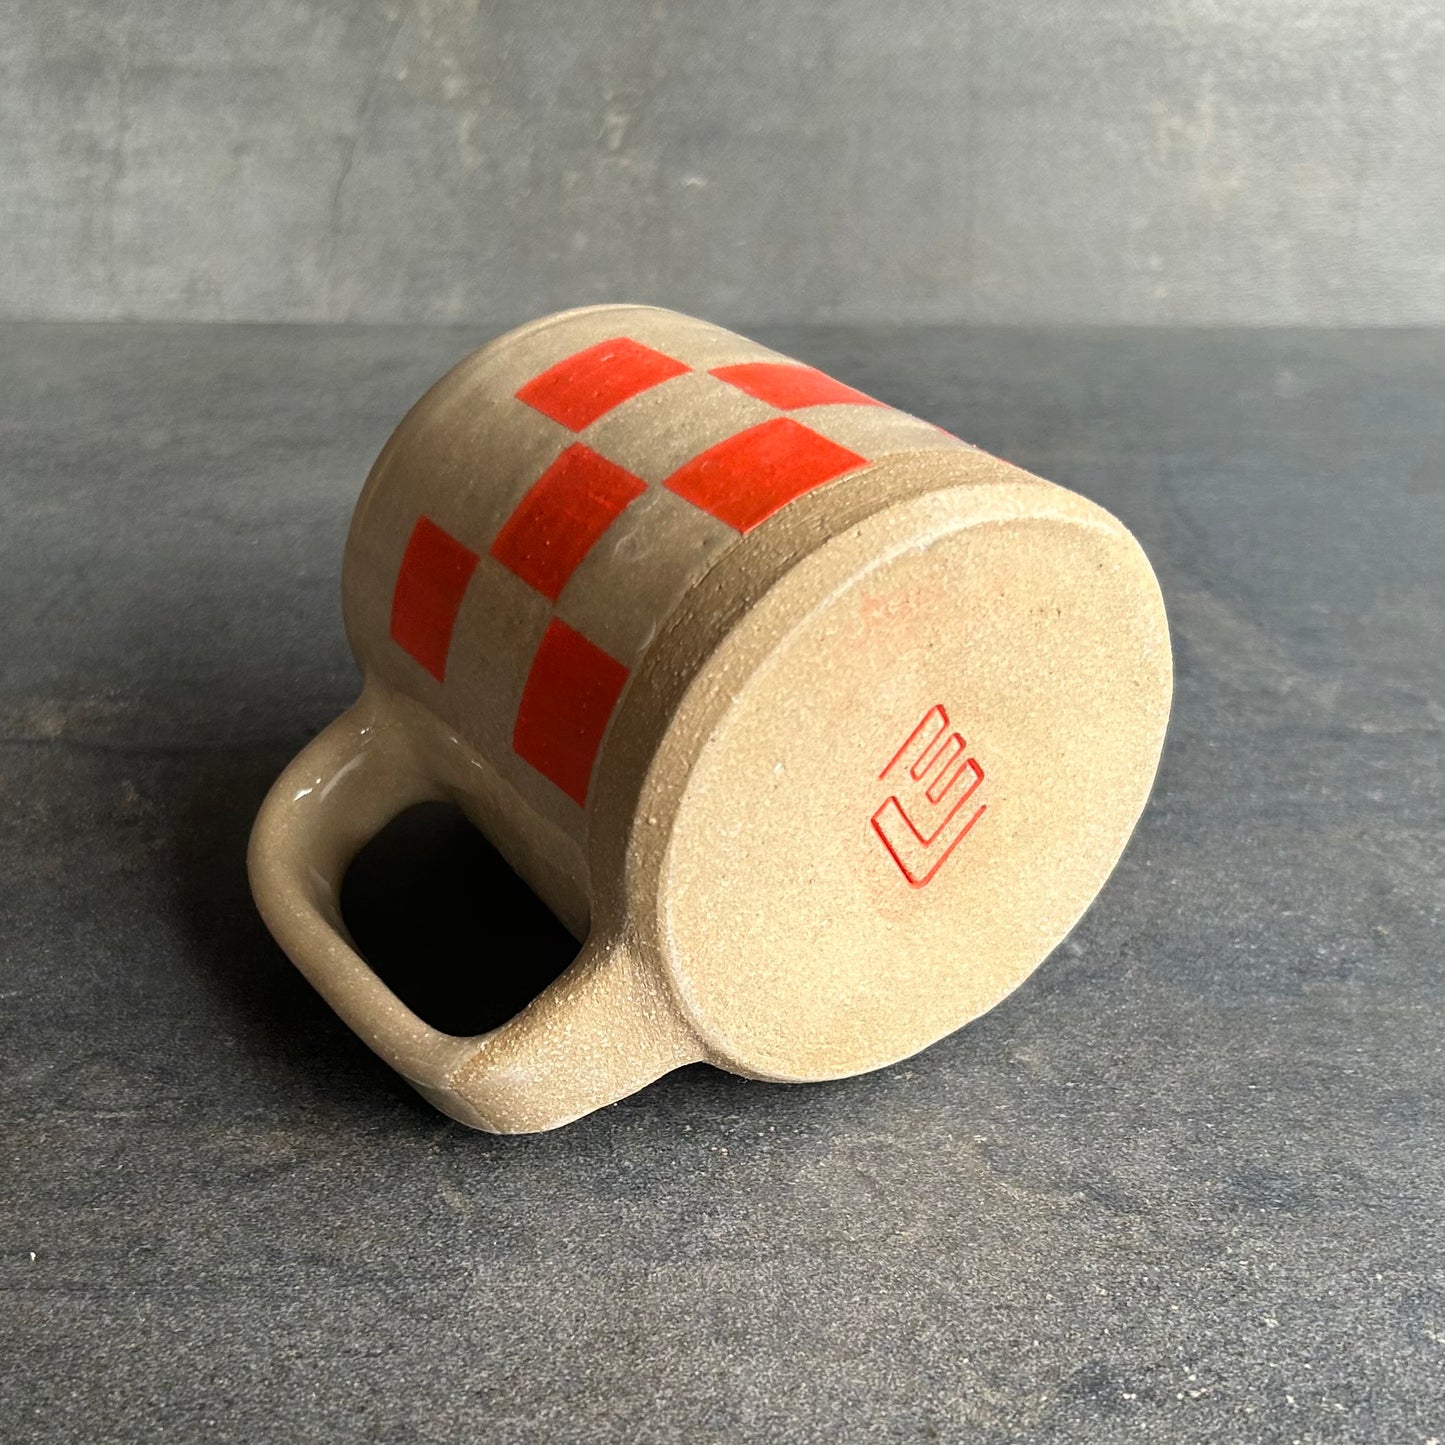 Checkerboard Mug - Sand / Red